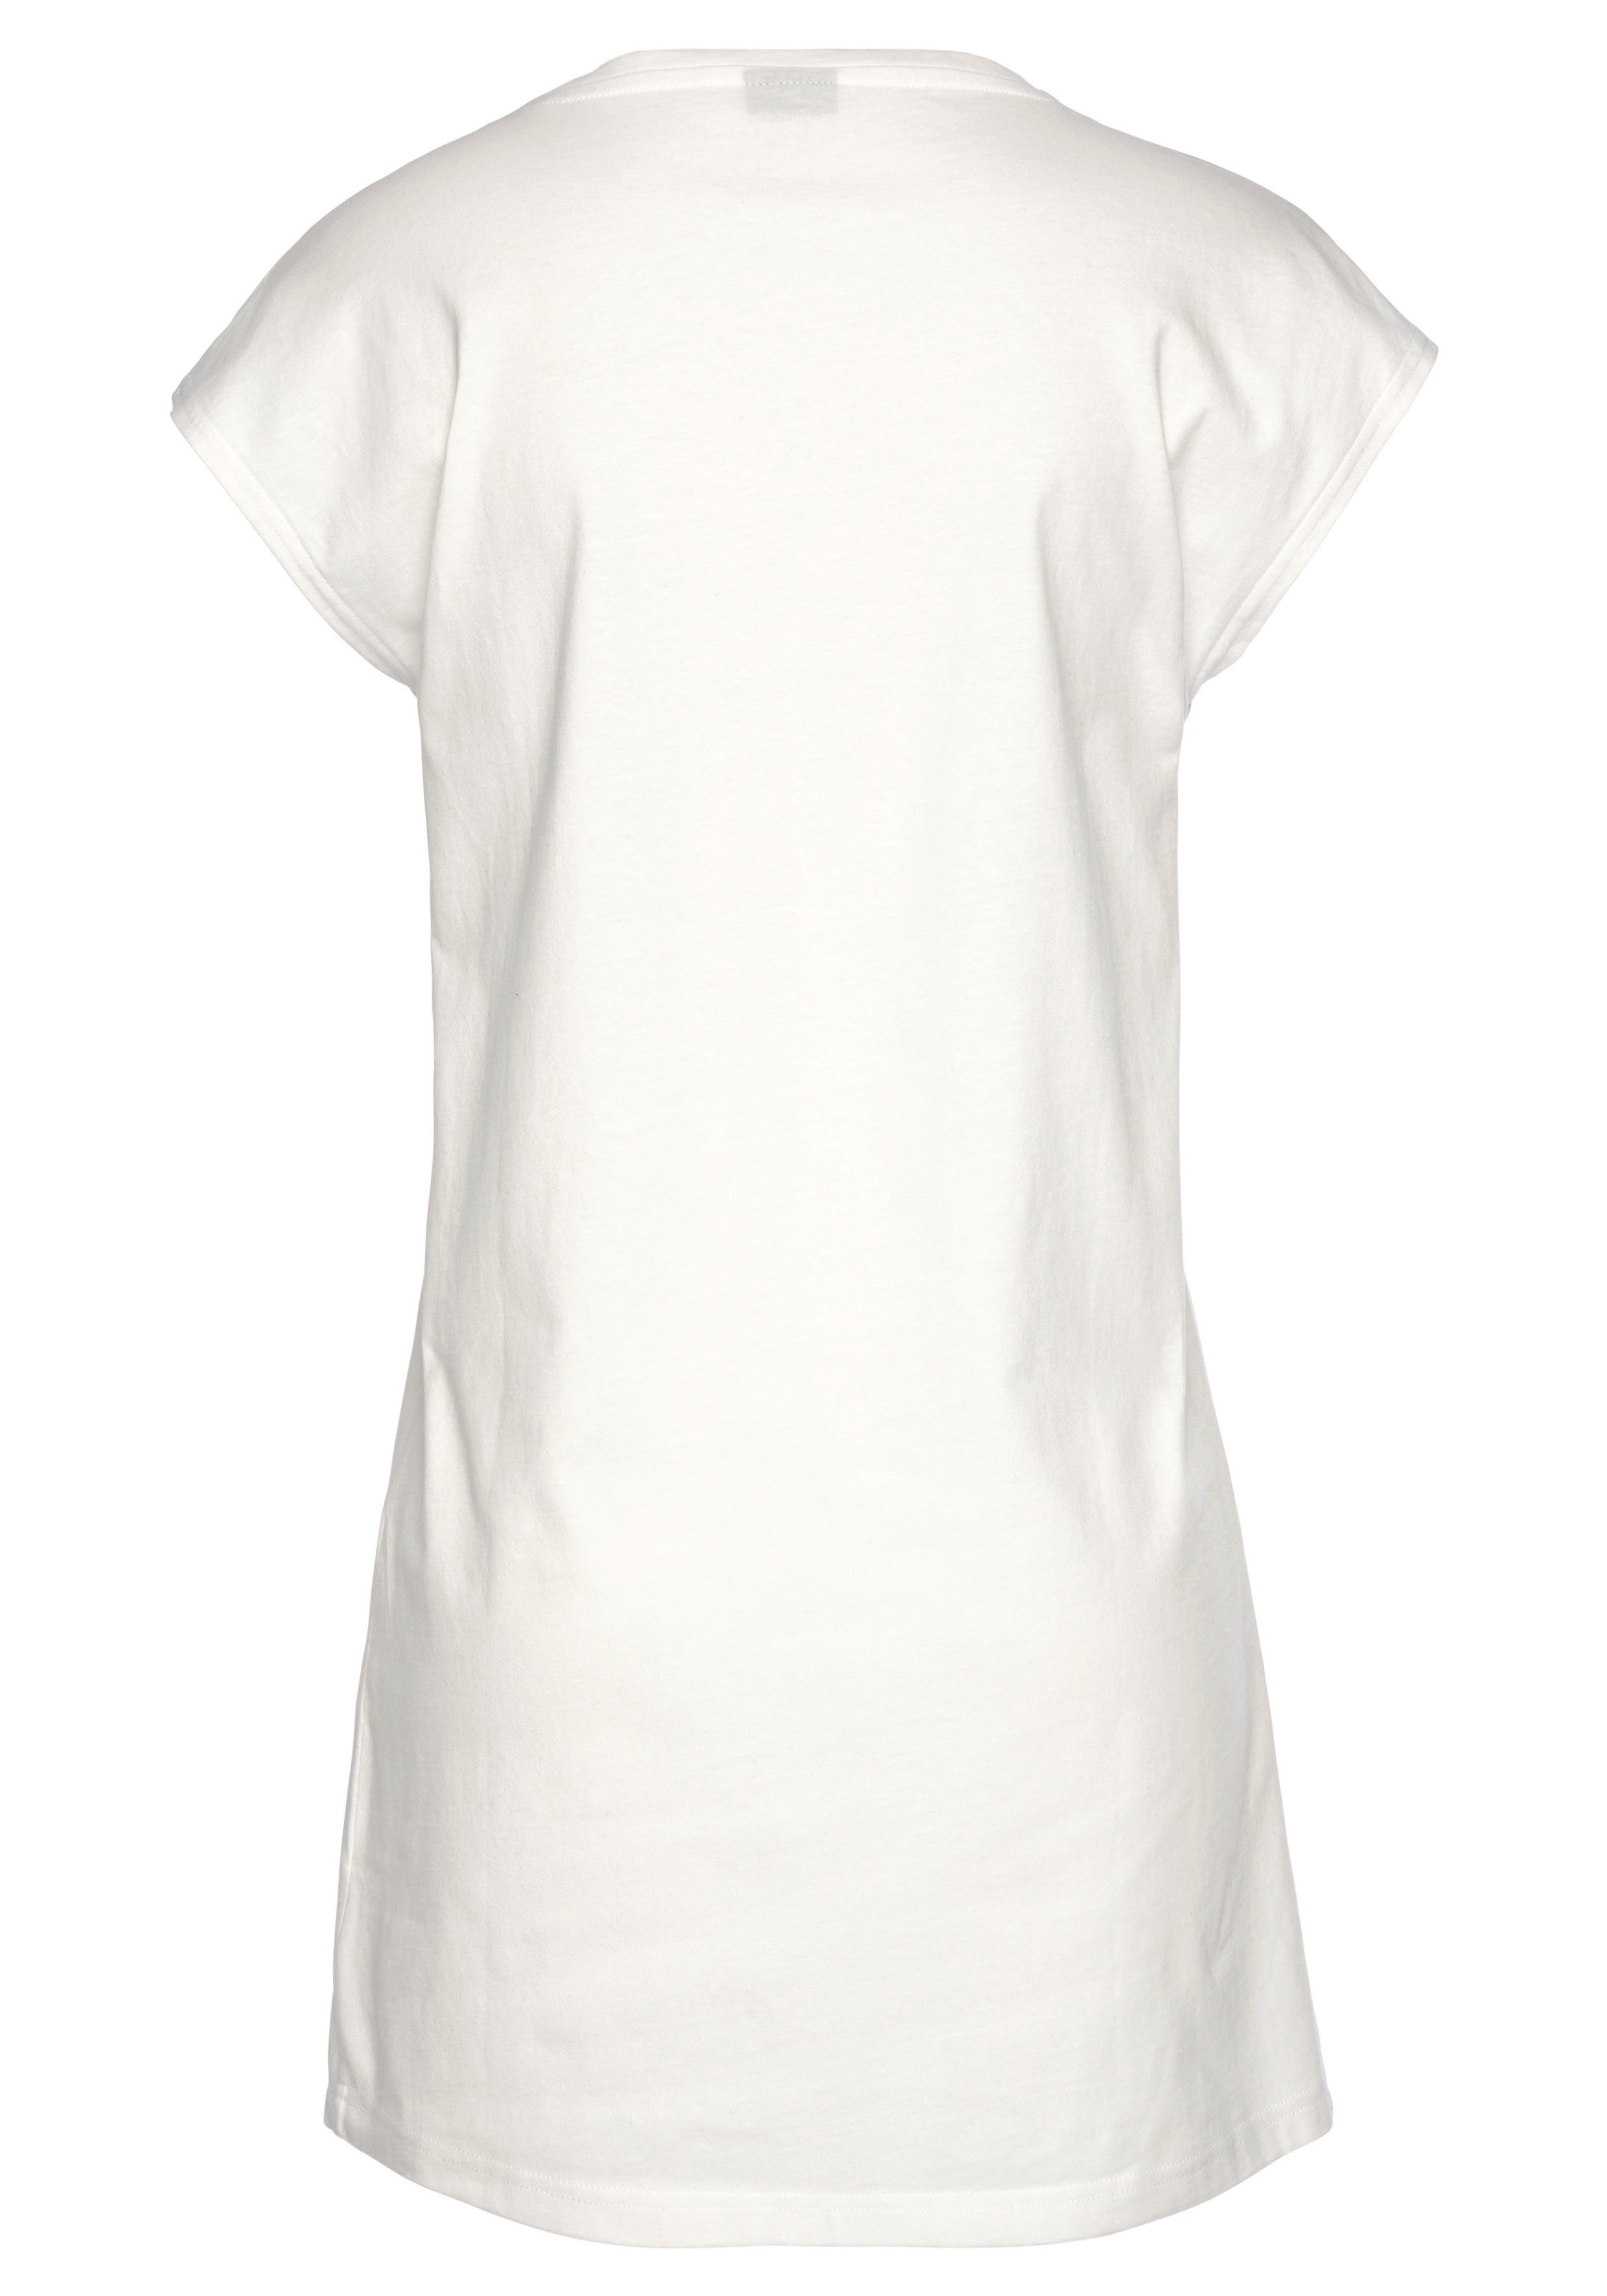 Buffalo Nachthemd Leomotiv weiß-schwarz mit